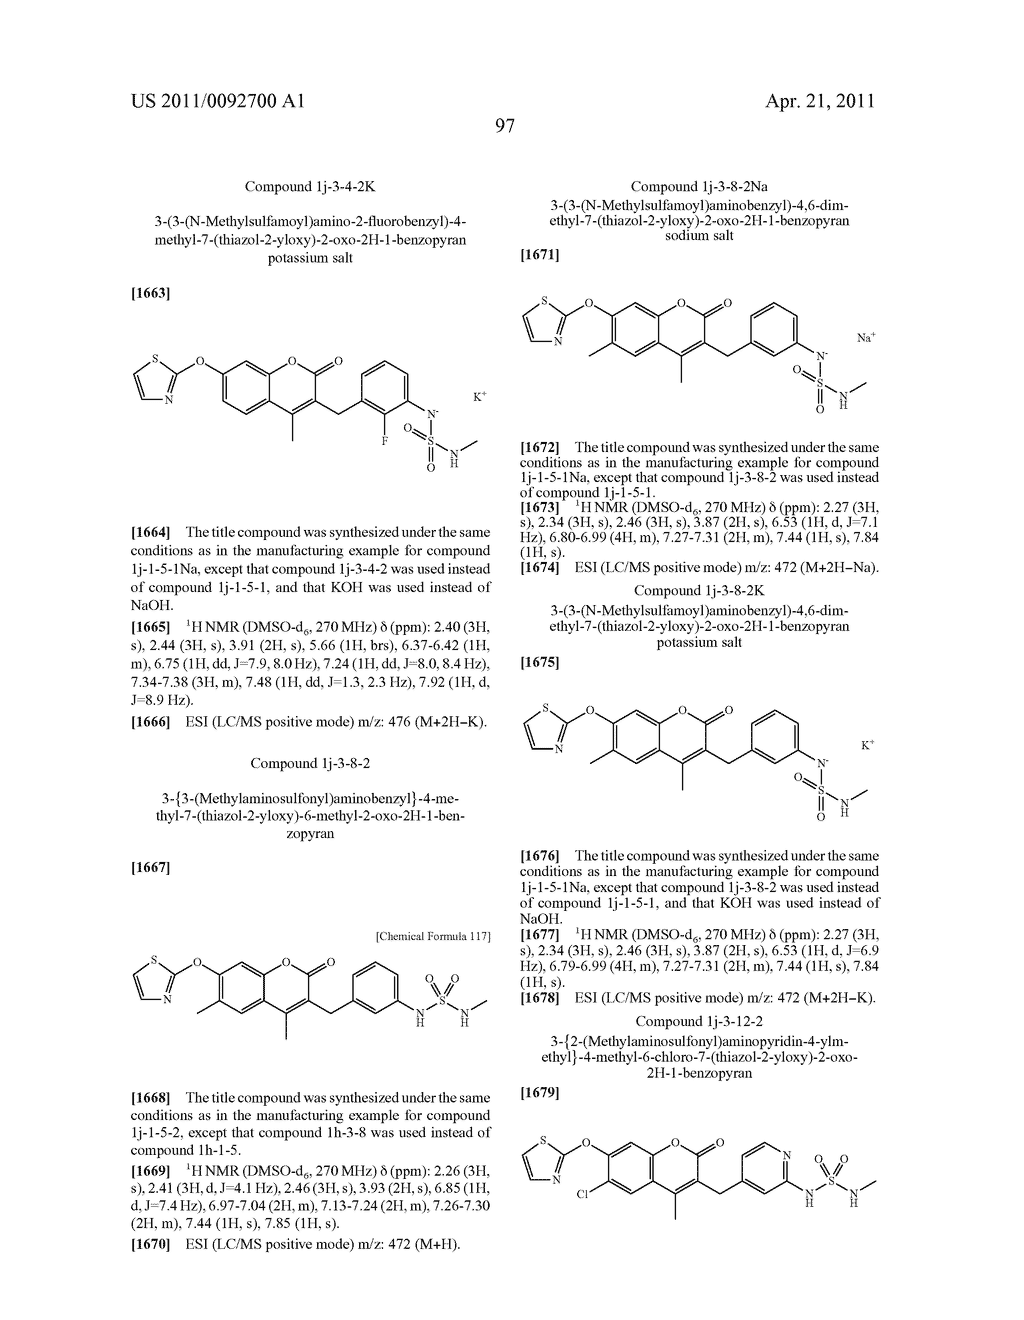 Novel Coumarin Derivative Having Antitumor Activity - diagram, schematic, and image 98